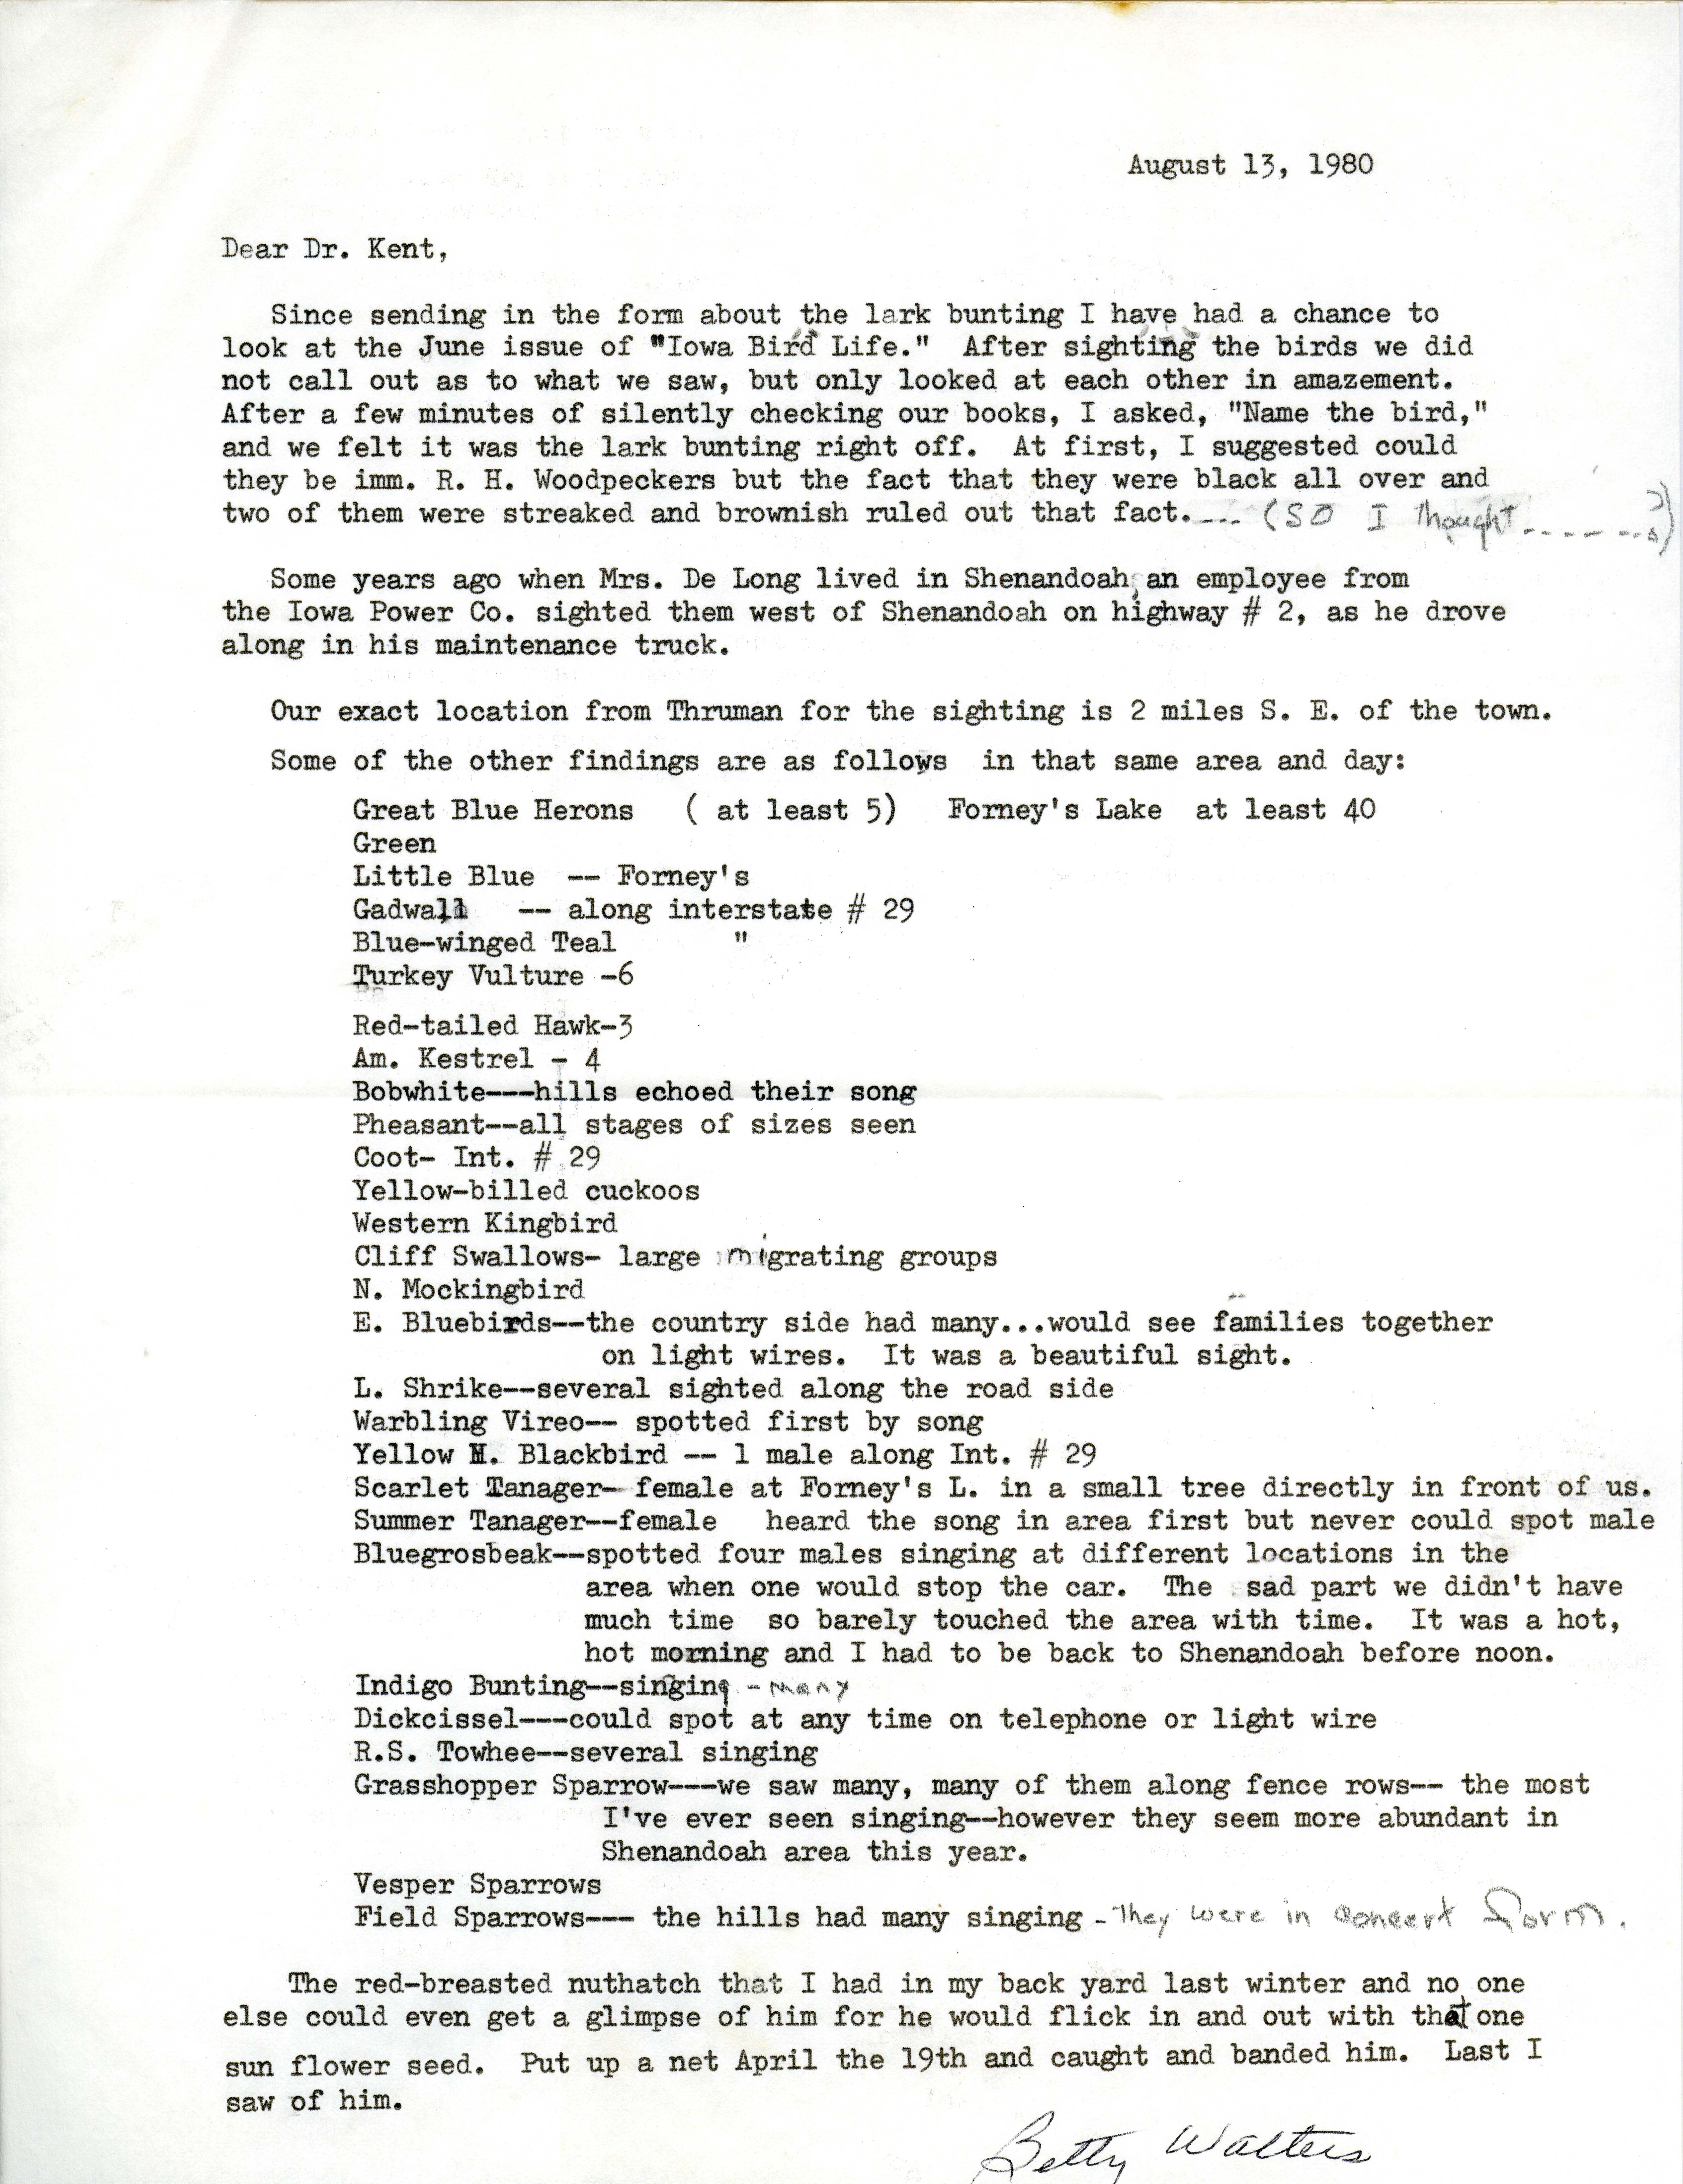 Betty Walters letter to Thomas H. Kent regarding bird sightings, August 13, 1980